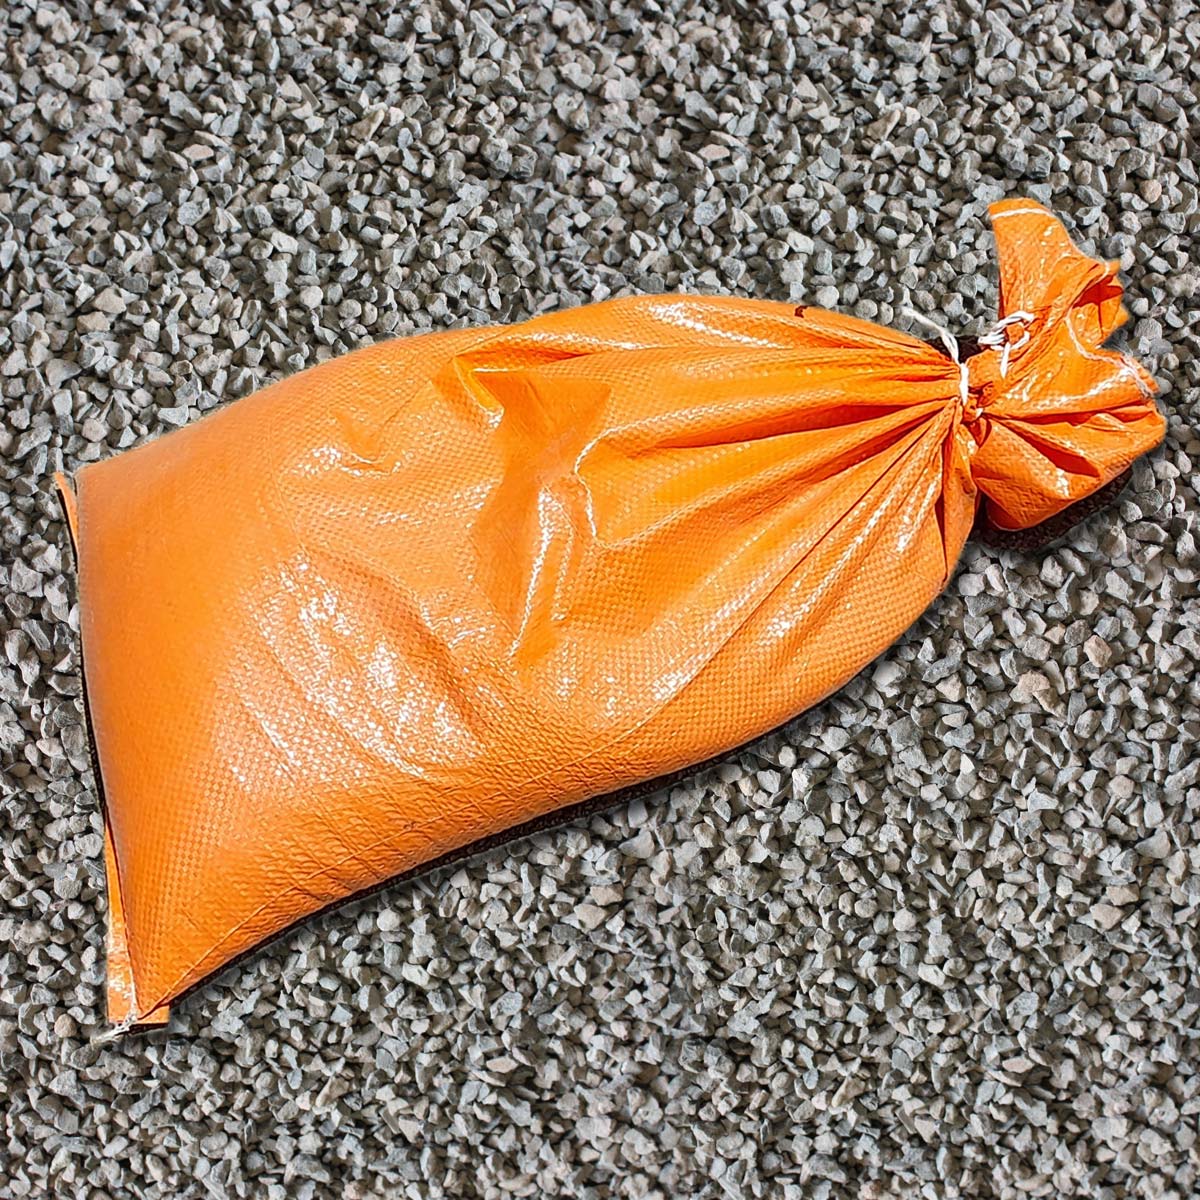 14mm drainage aggregate with orange hi-vis sandbags